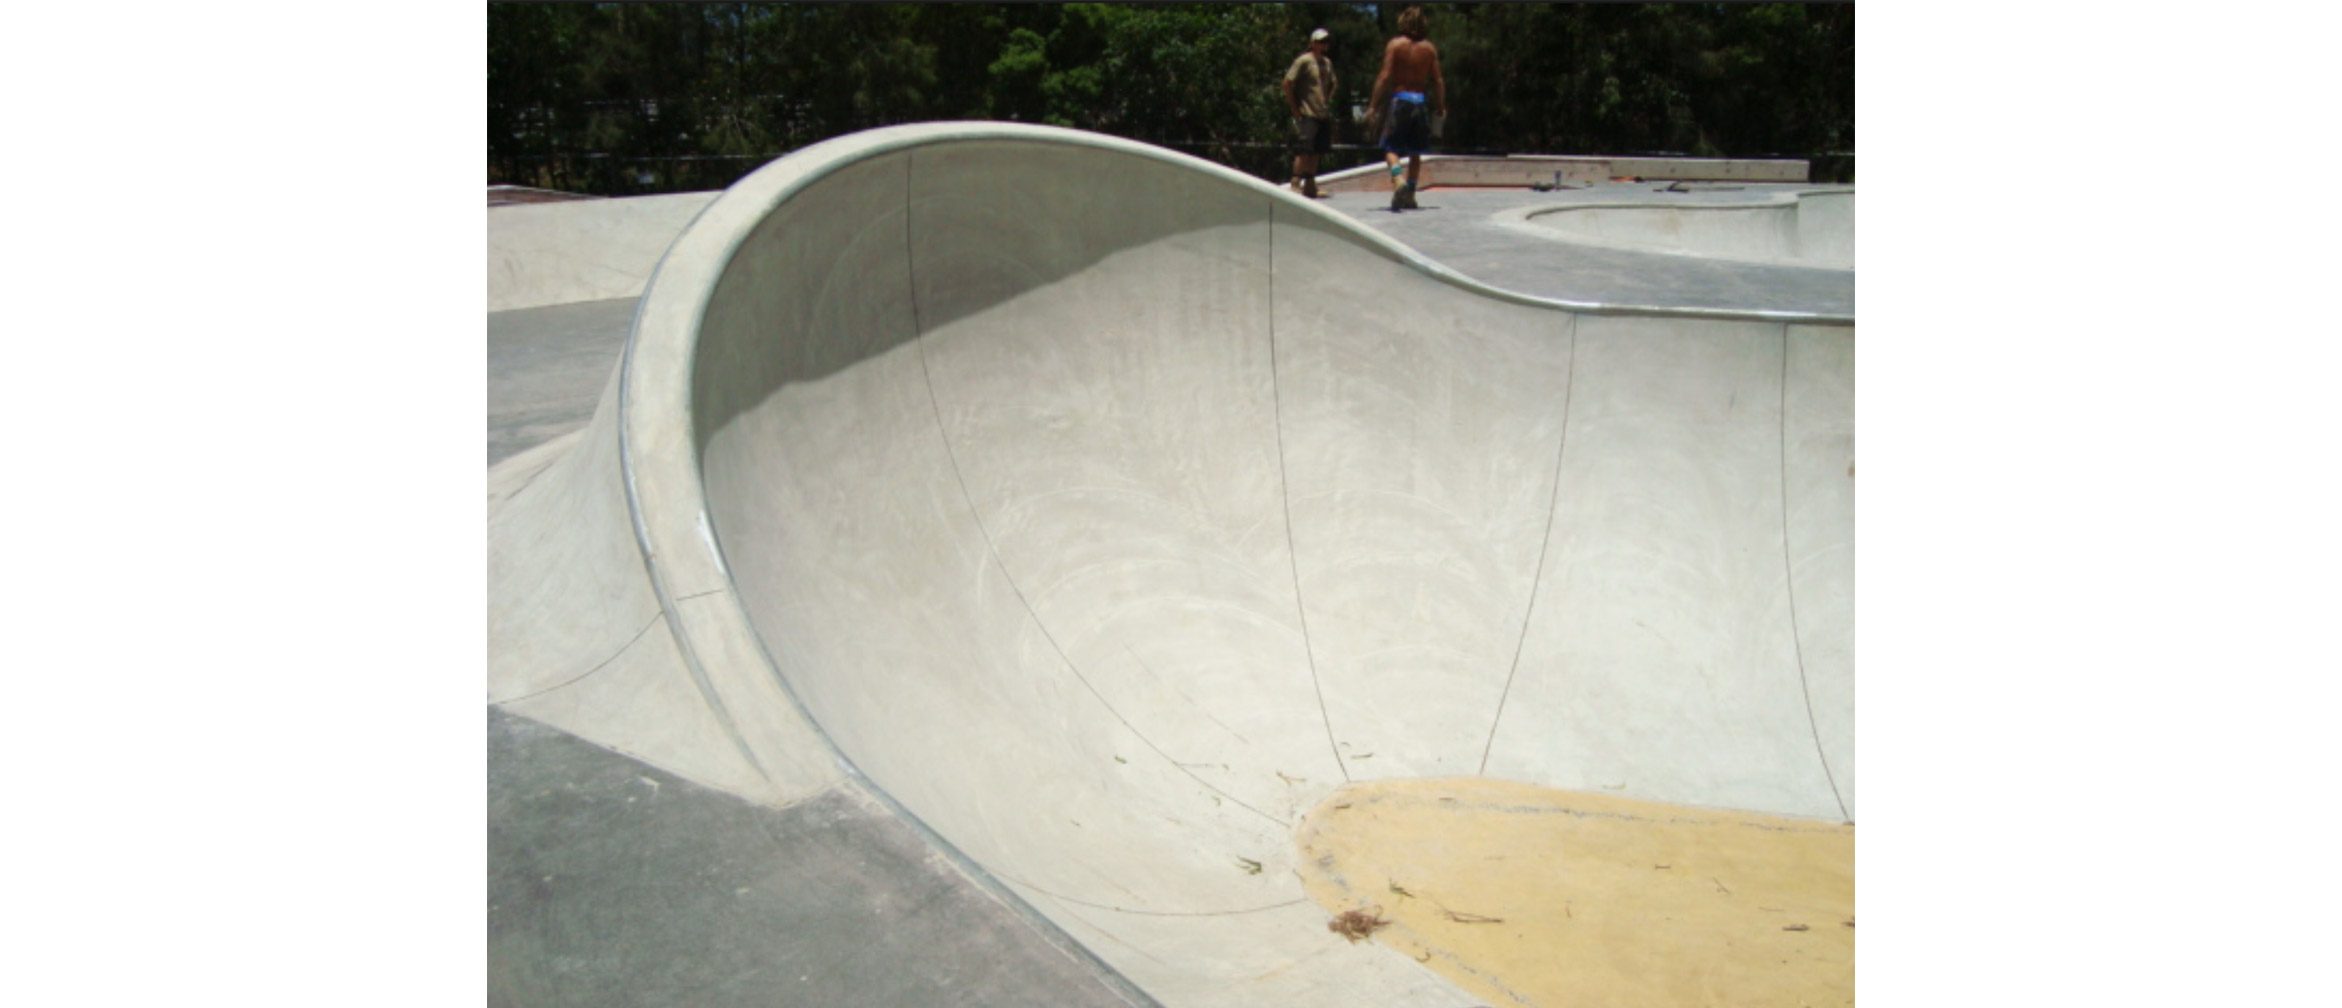 Nerang skate park bowl section, taco